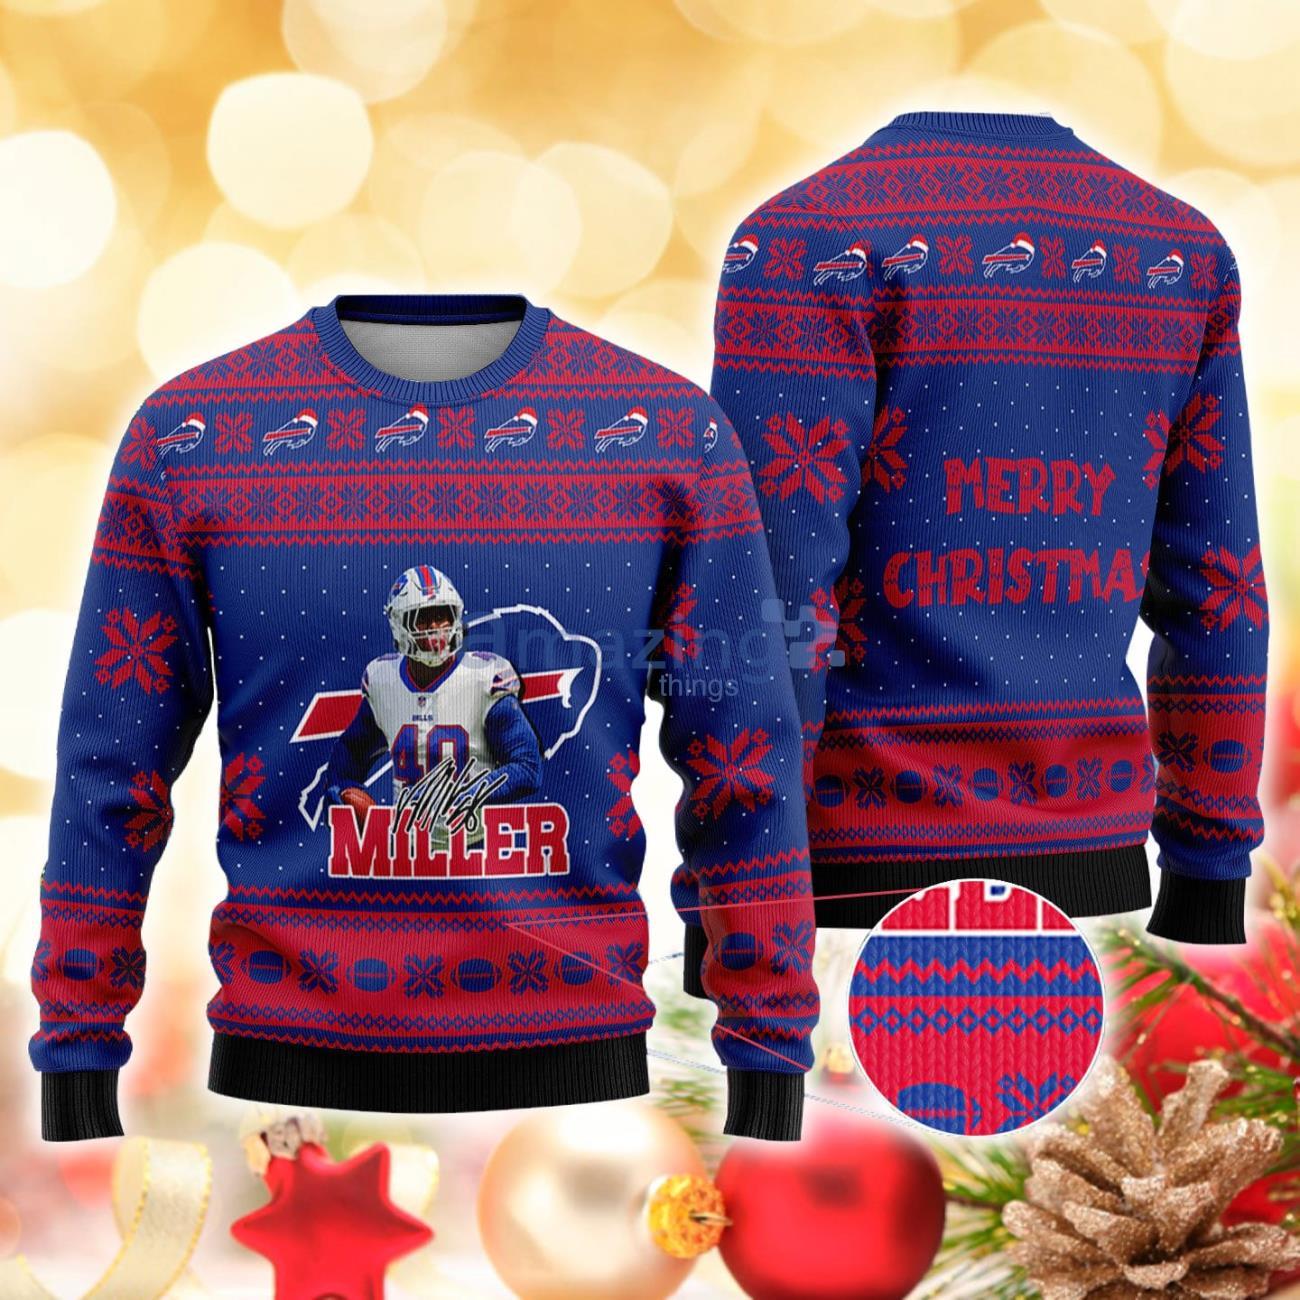 Buffalo-Bills-nfl-Von-Miller-42-Christmas-Knitted-Sweater-for-fan